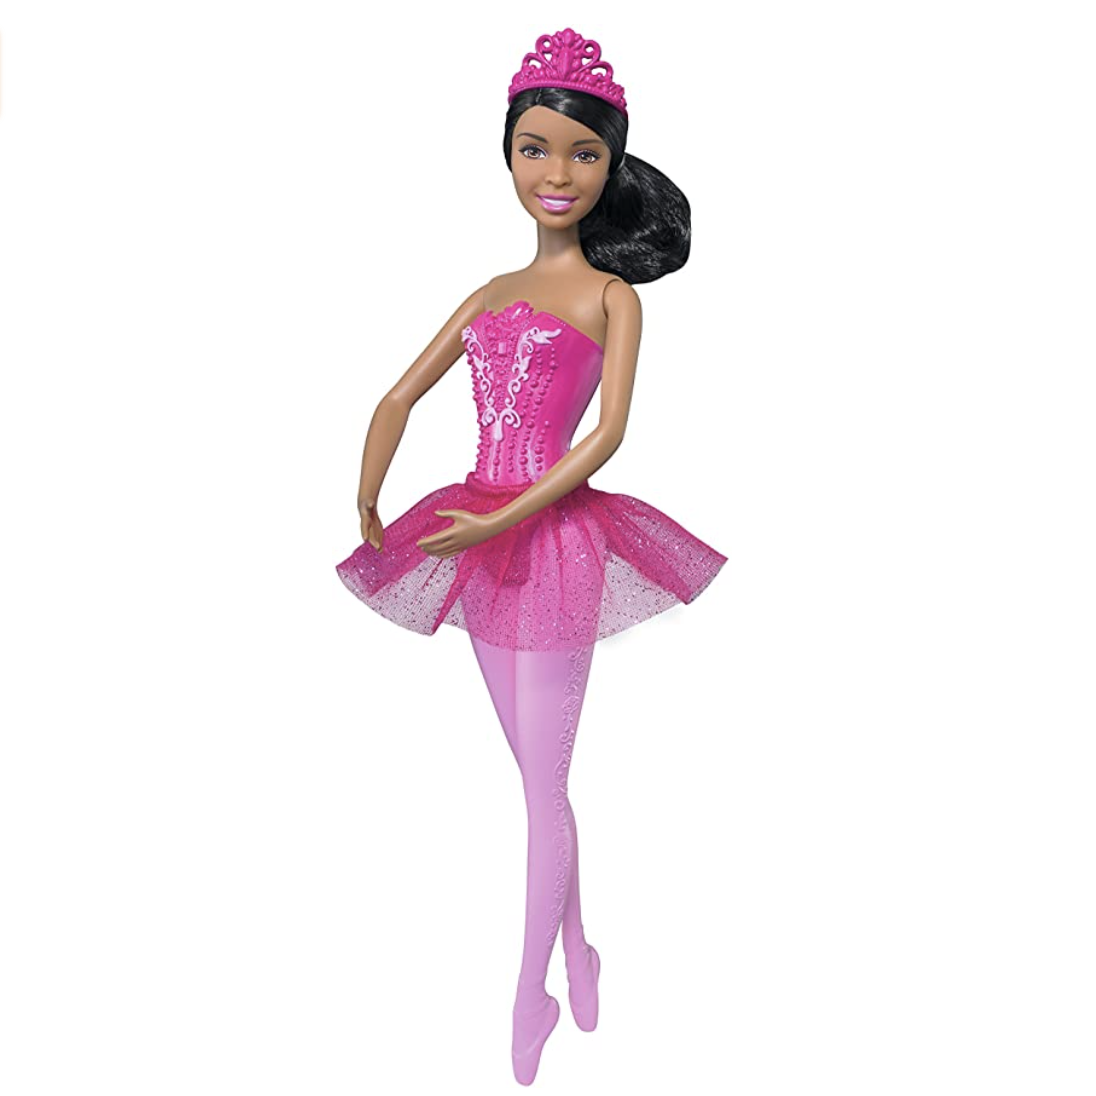 Amazon.com: Barbie Ballerina Doll in Removable Tutu : Mattel: Toys & Games